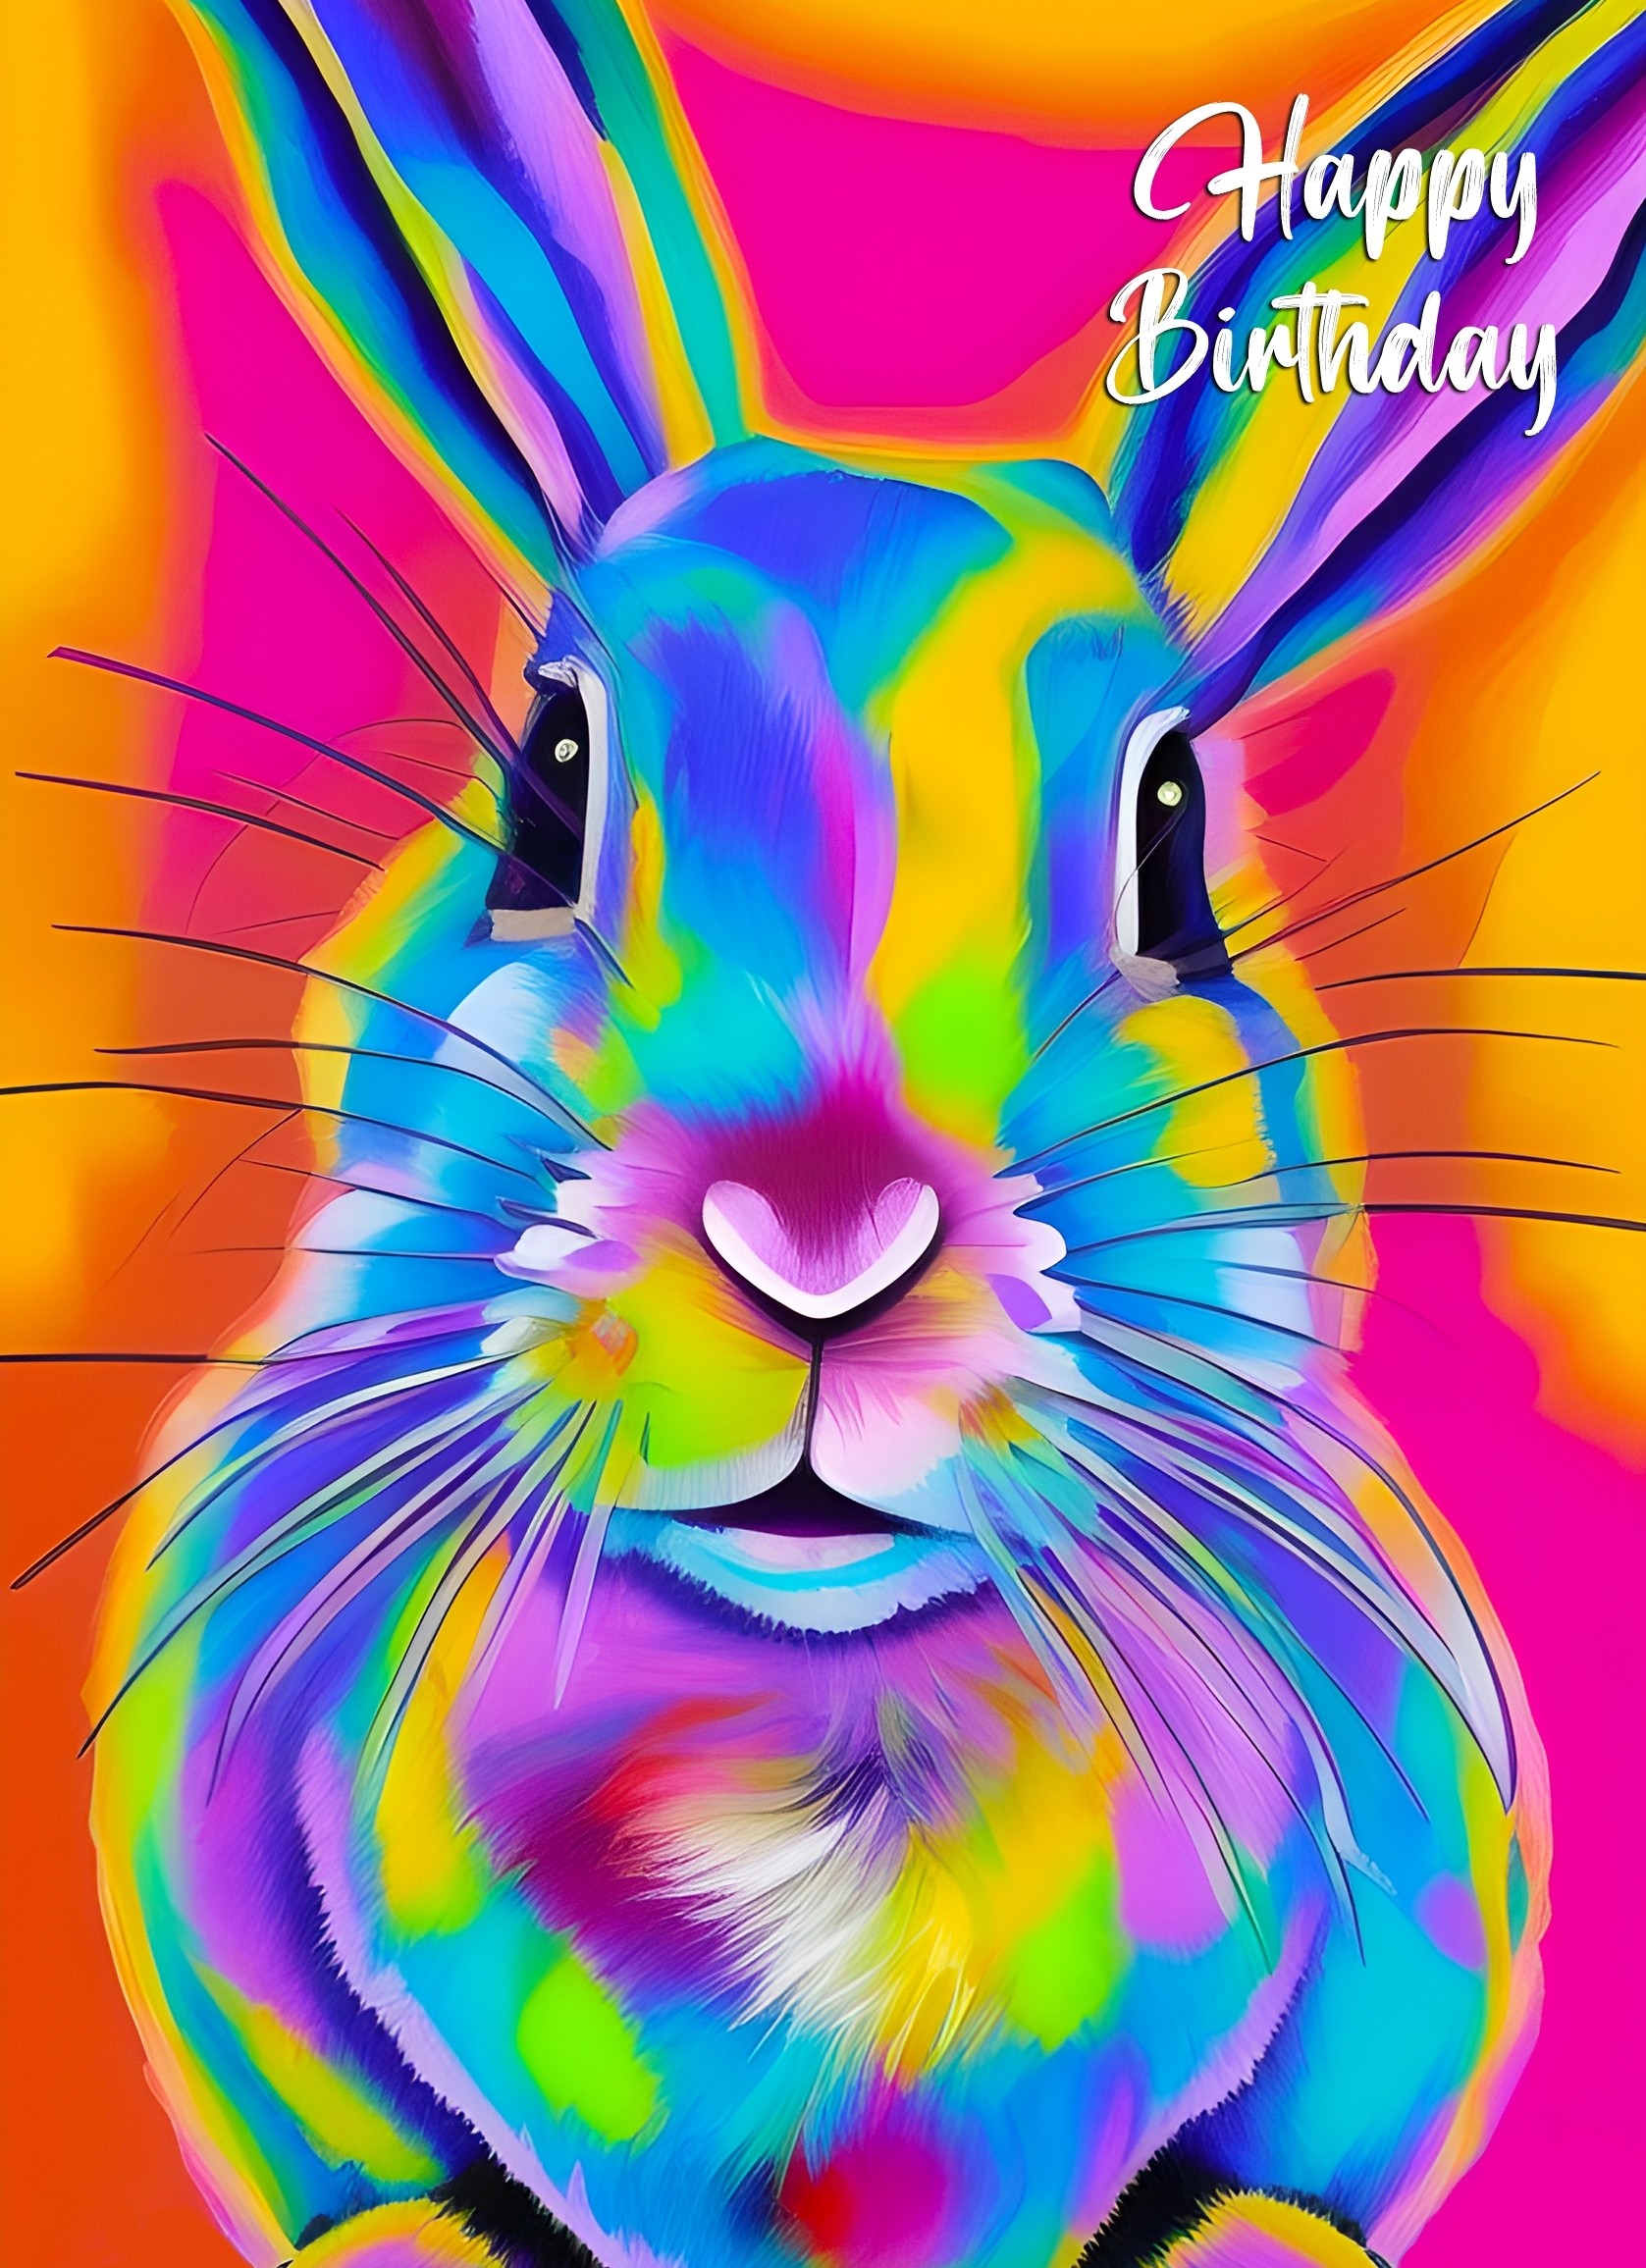 Rabbit Animal Colourful Abstract Art Birthday Card